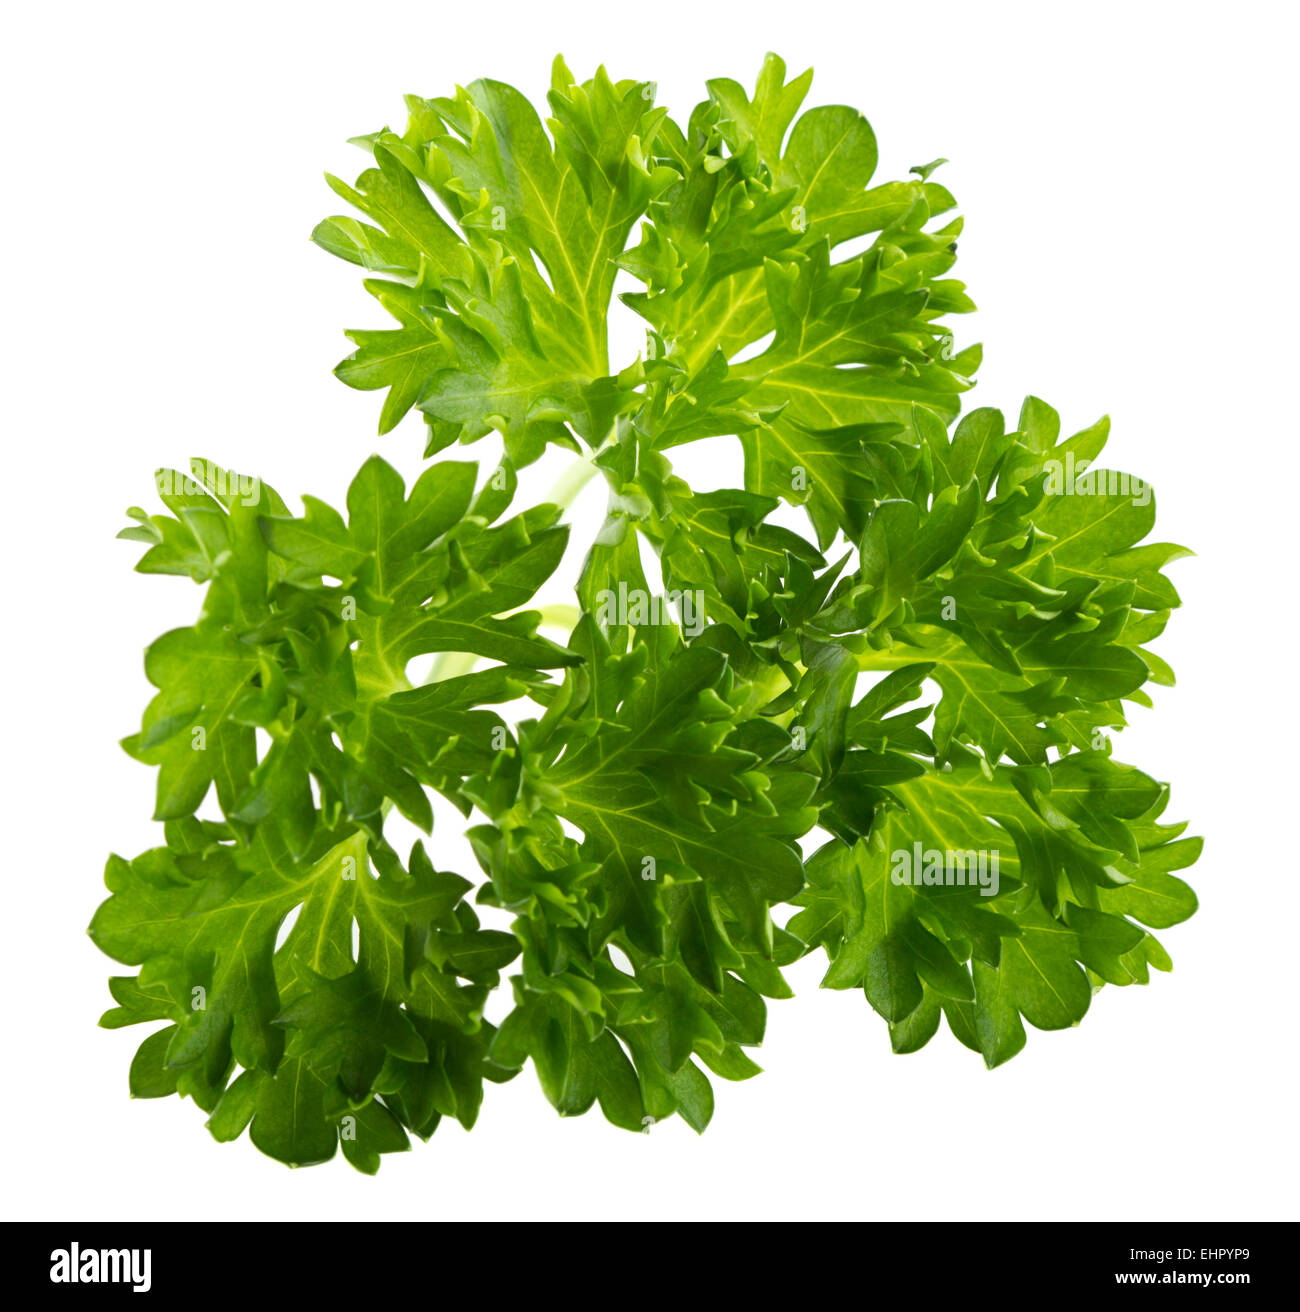 Sprig of parsley isolated on white background Stock Photo